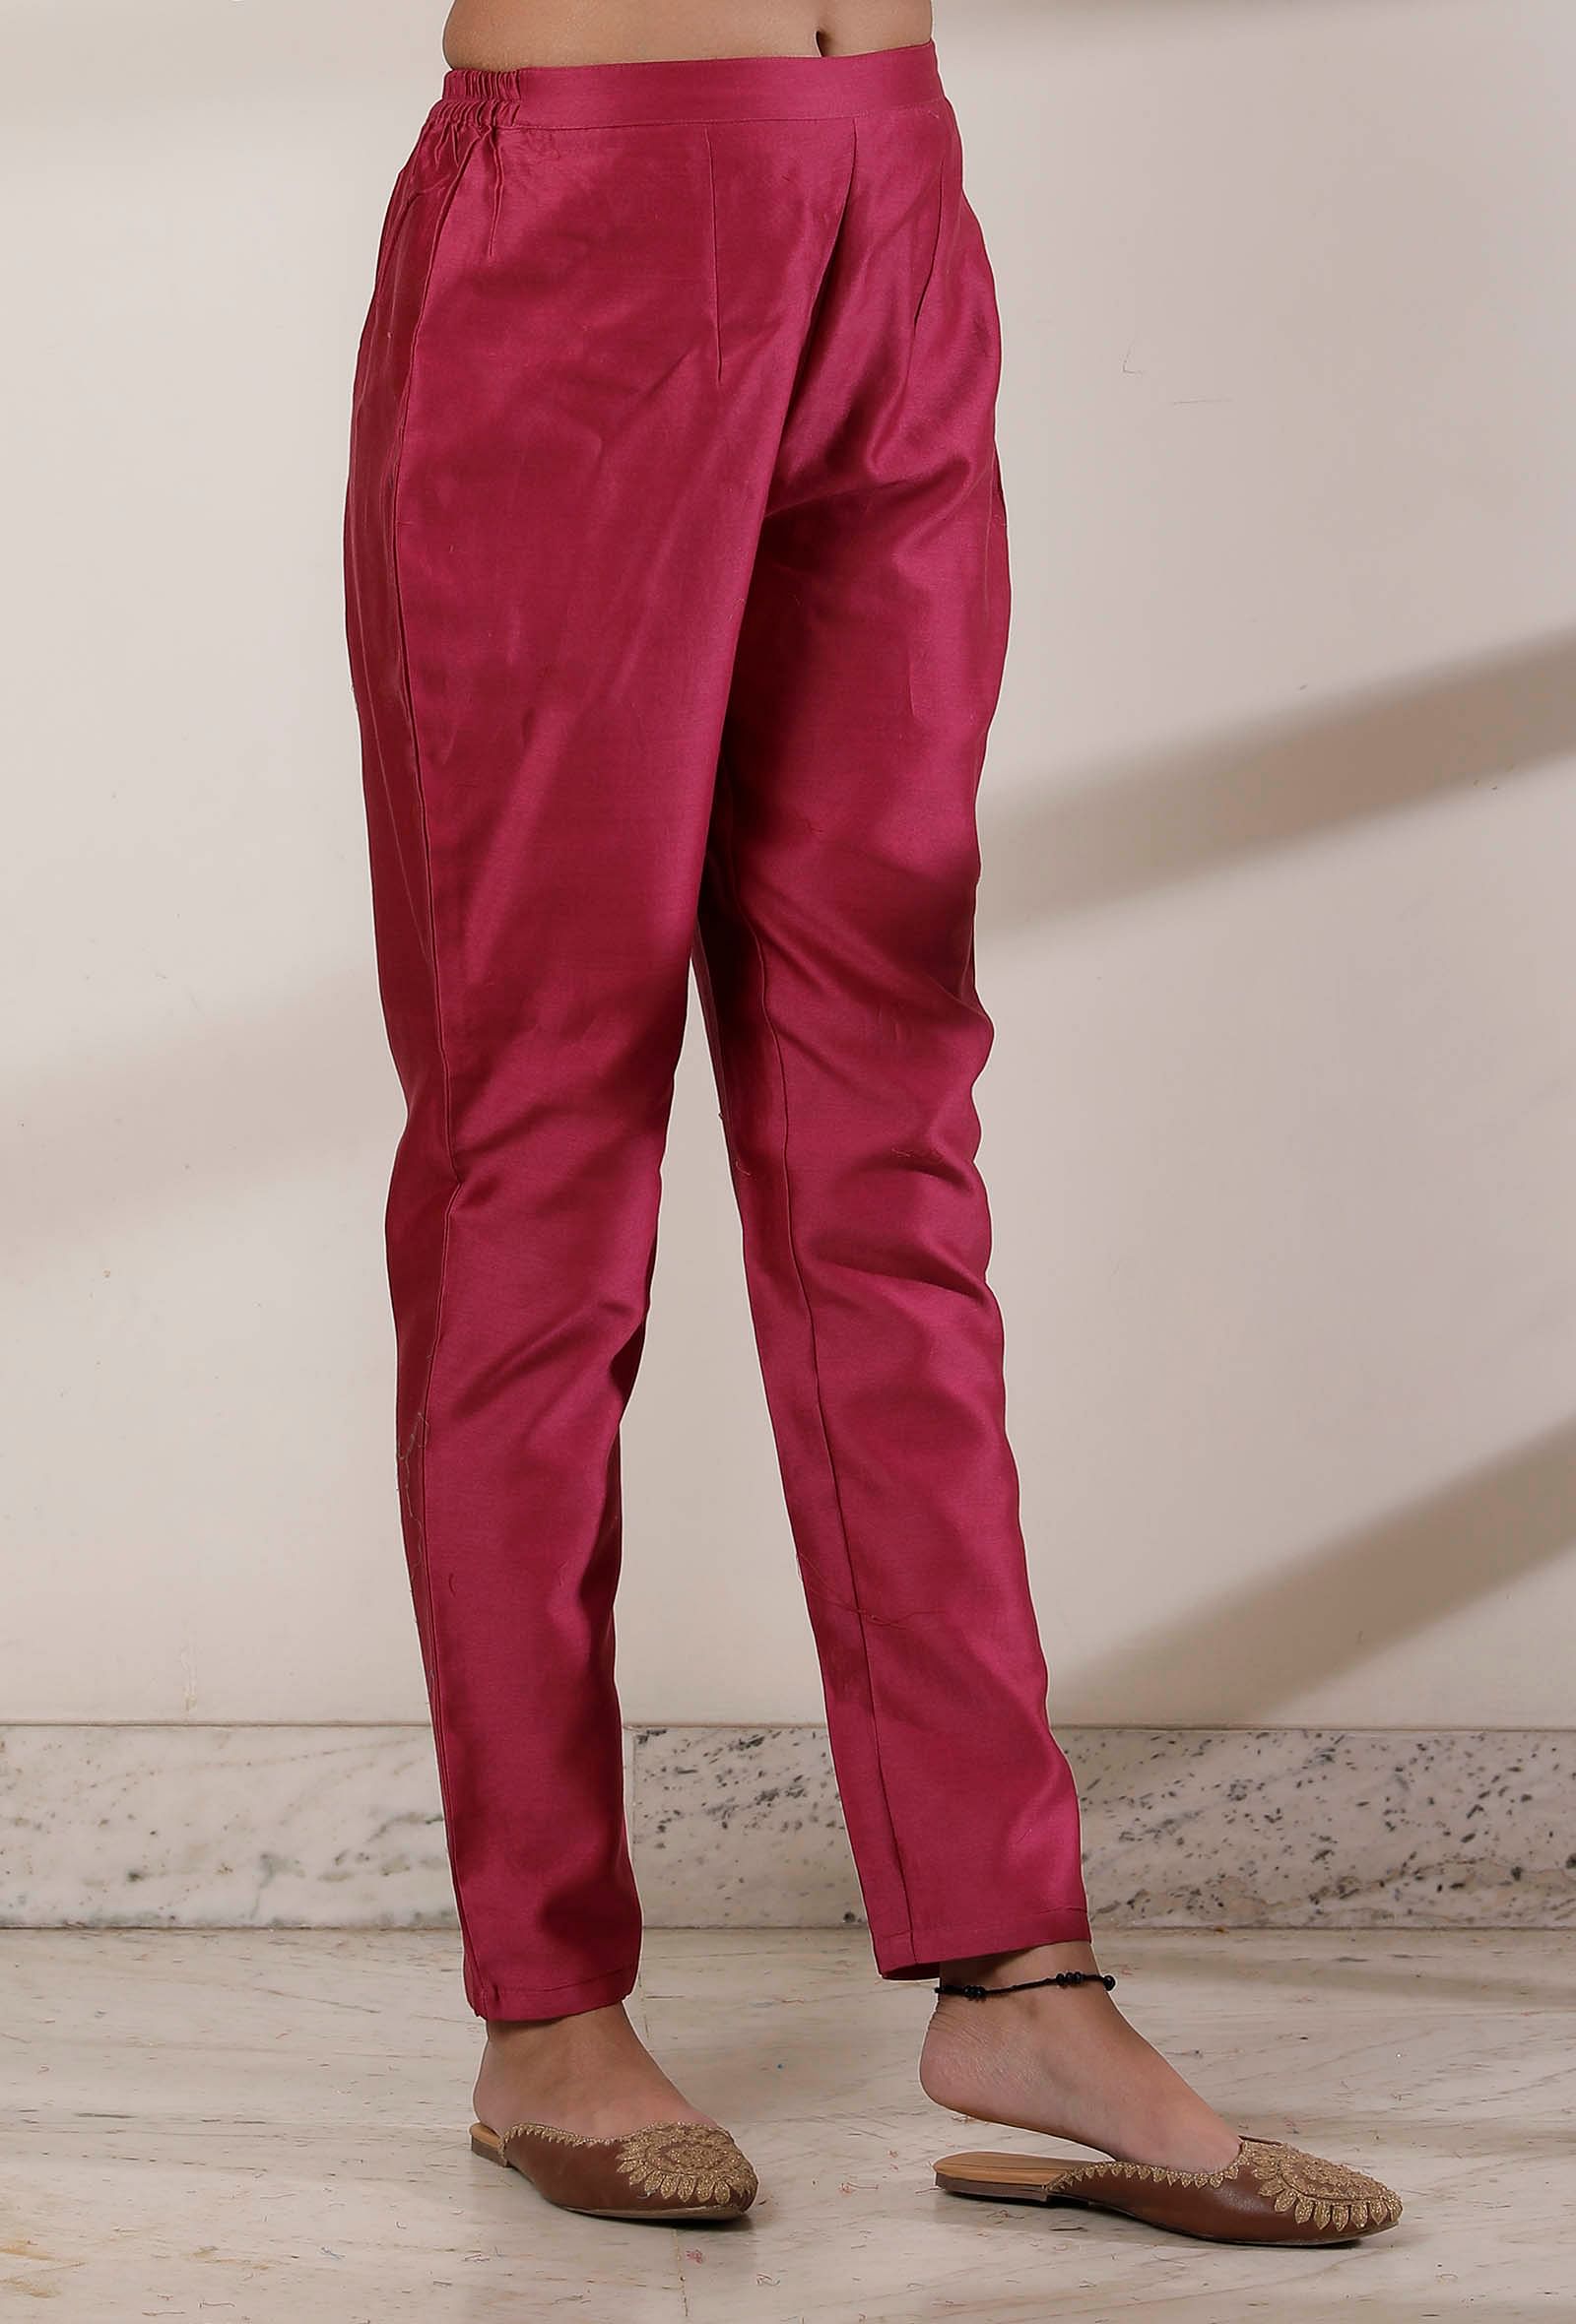 Men's Casual Pencil Pants Slim Fit Skinny Fashion Business Formal Dress  Trousers | eBay